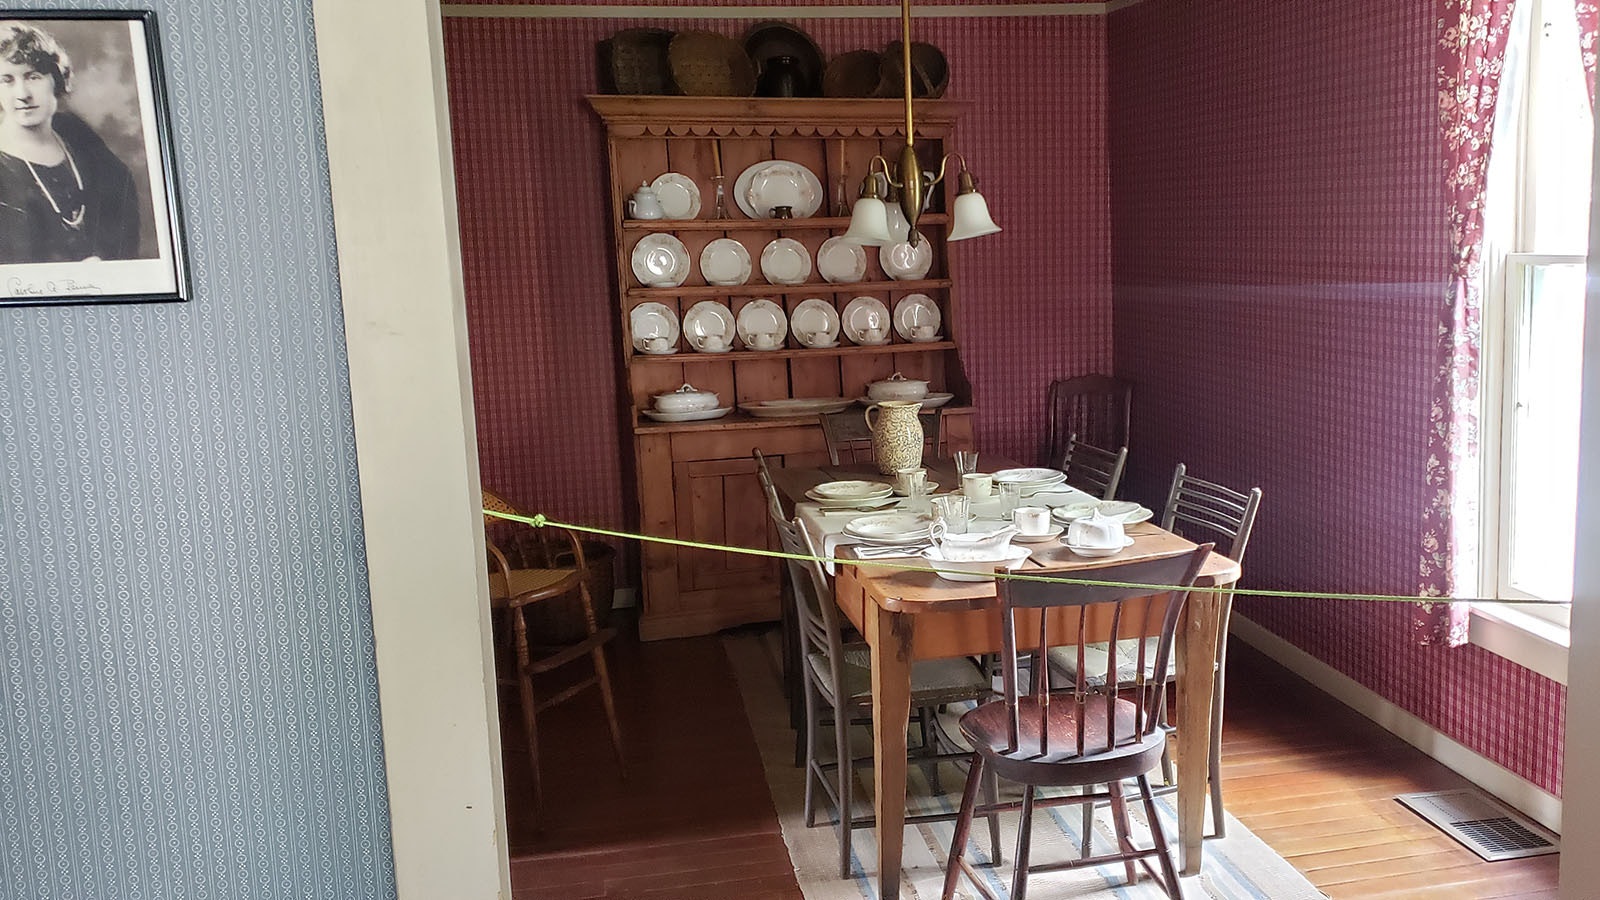 The dining room in the Penneys Kemmerer household.